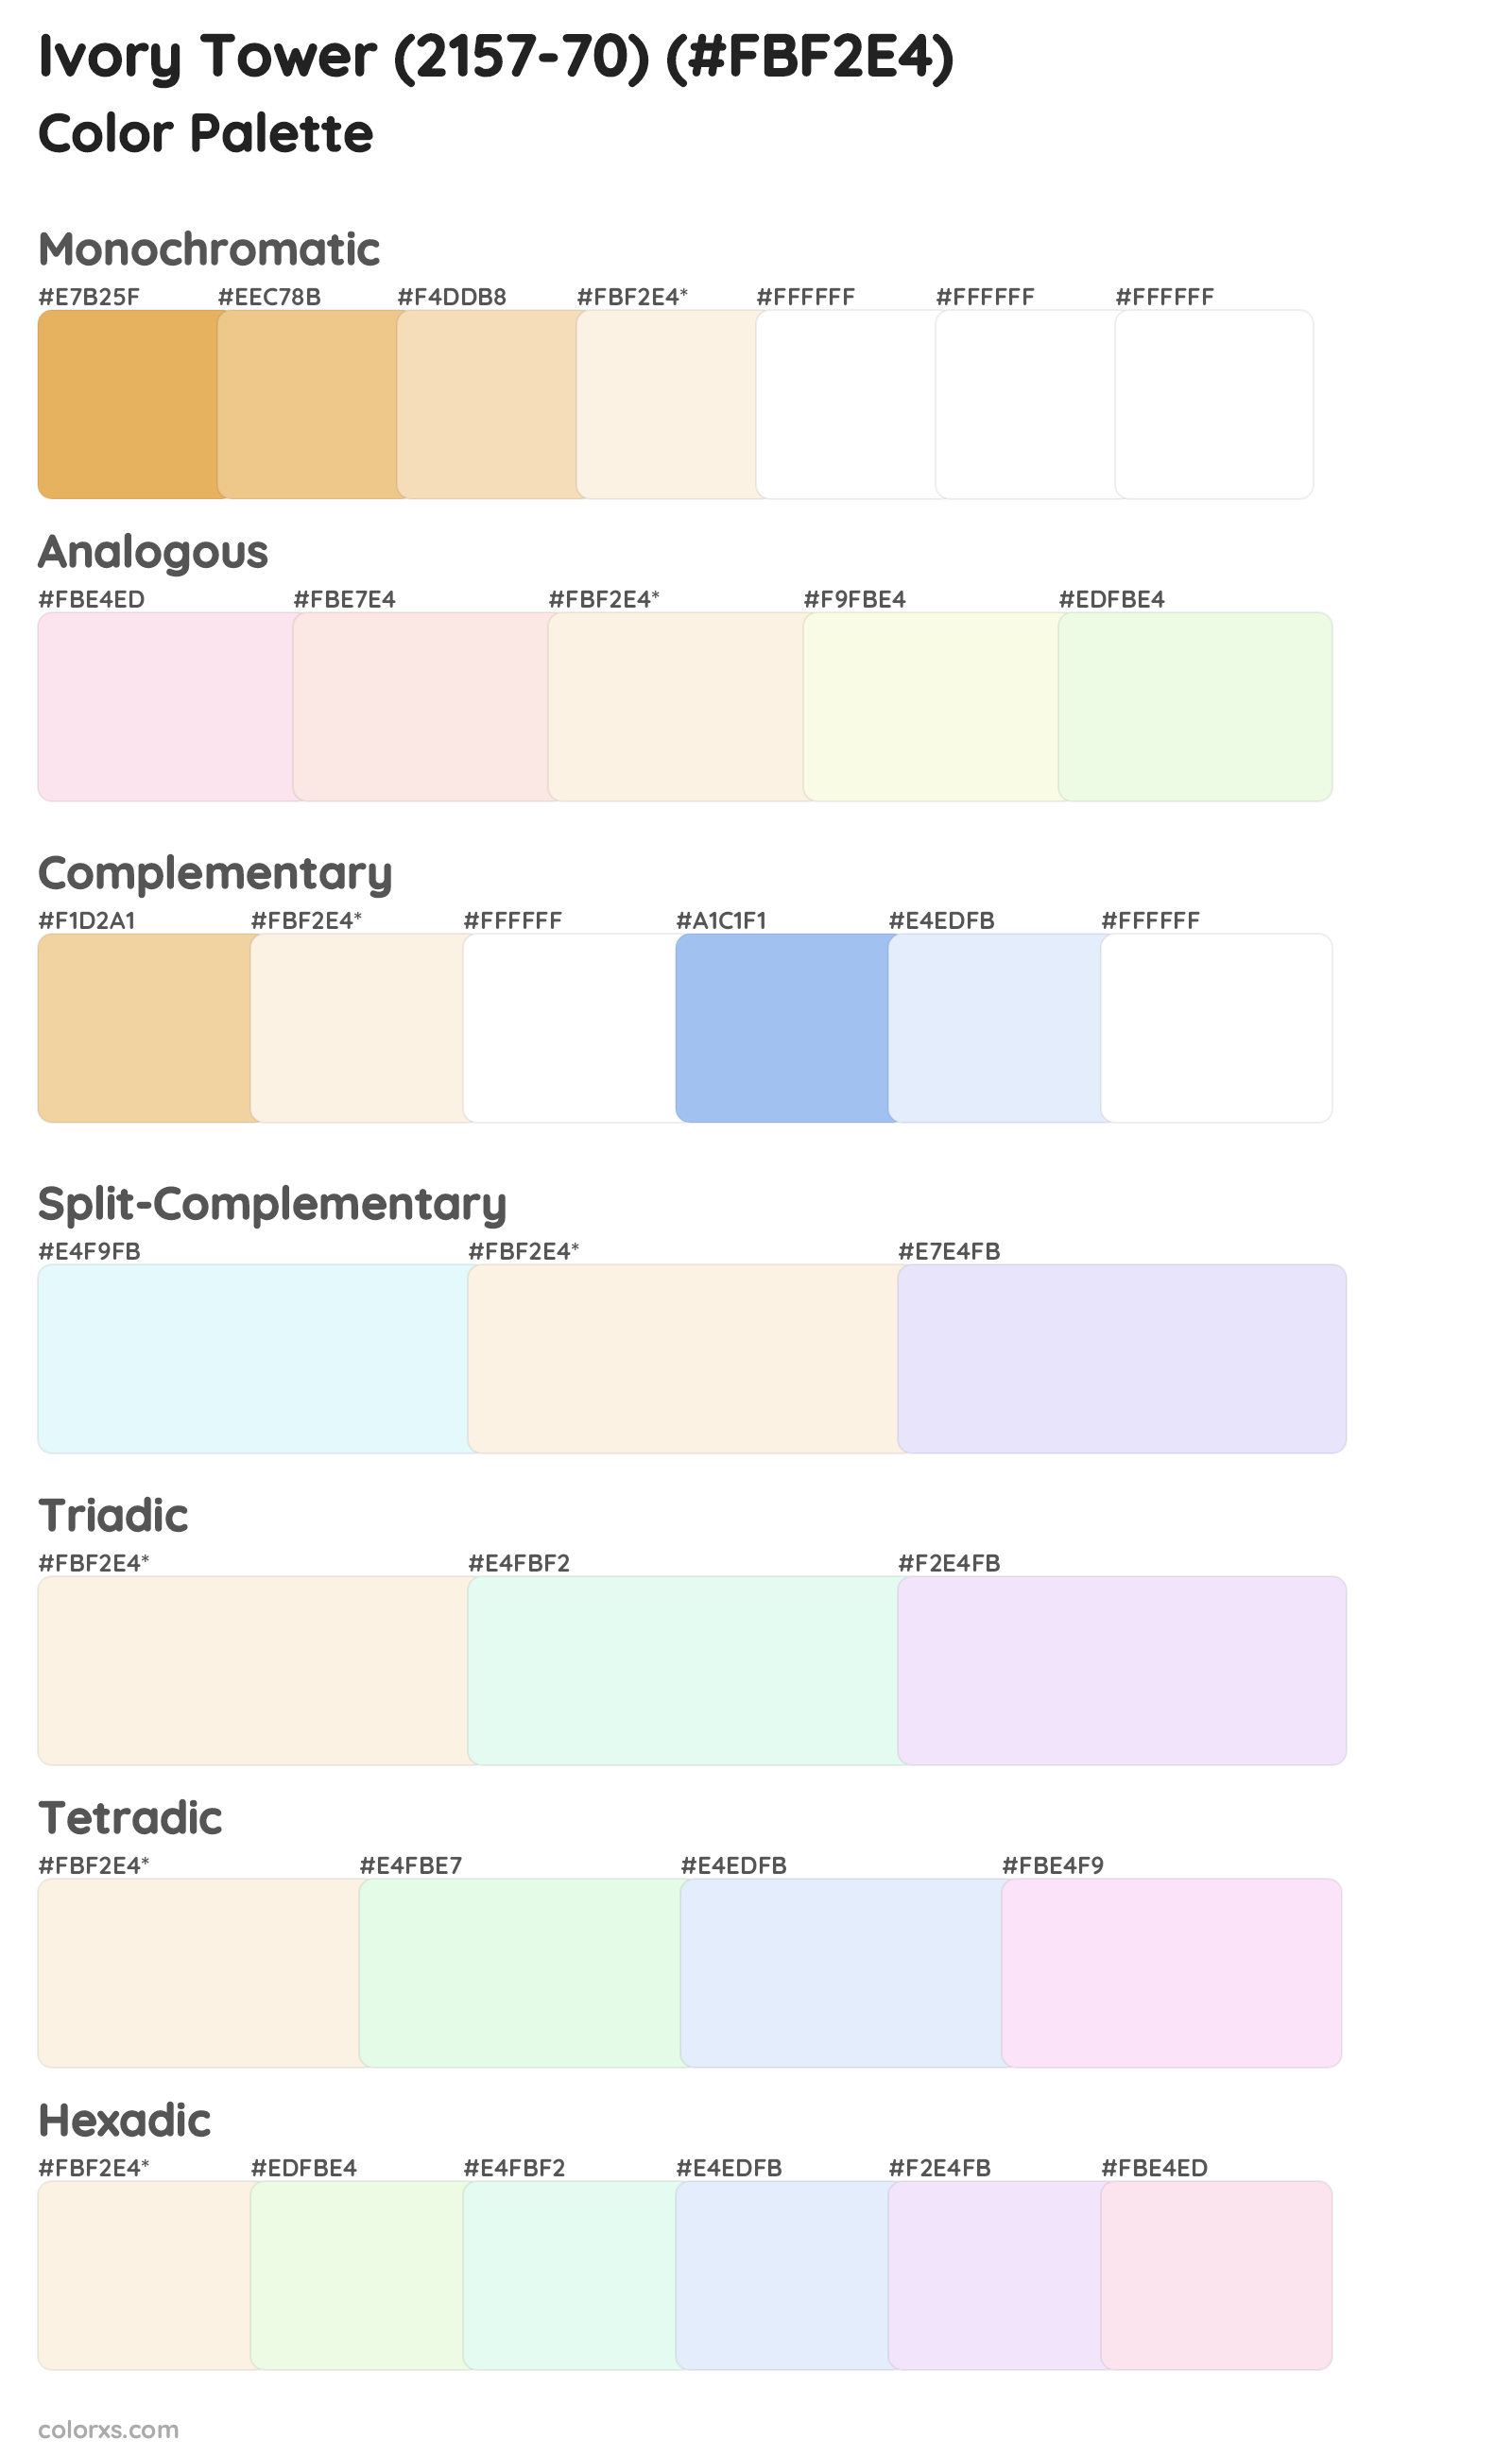 Ivory Tower (2157-70) Color Scheme Palettes